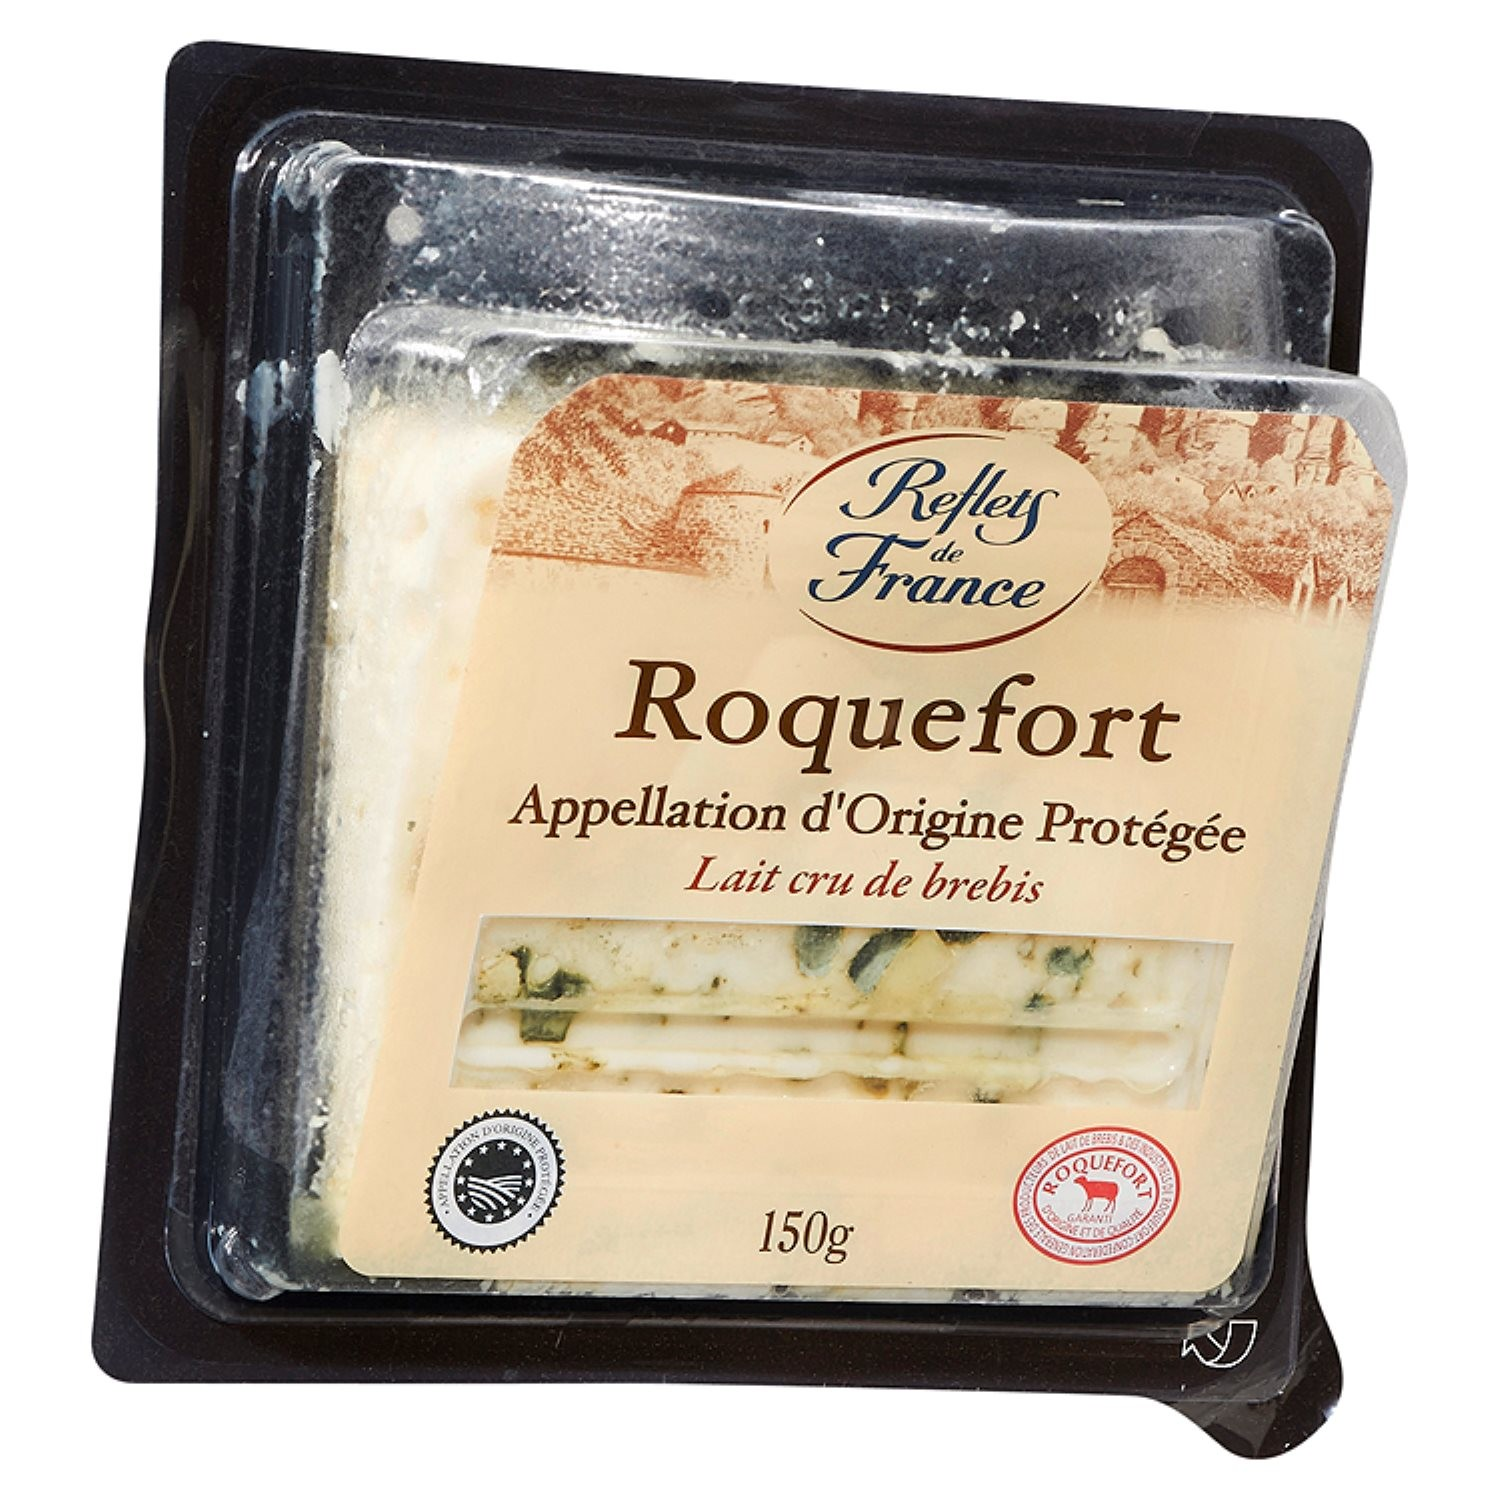 Roquefort con Leche Cruda de Oveja AOP Reflets De France 150 g